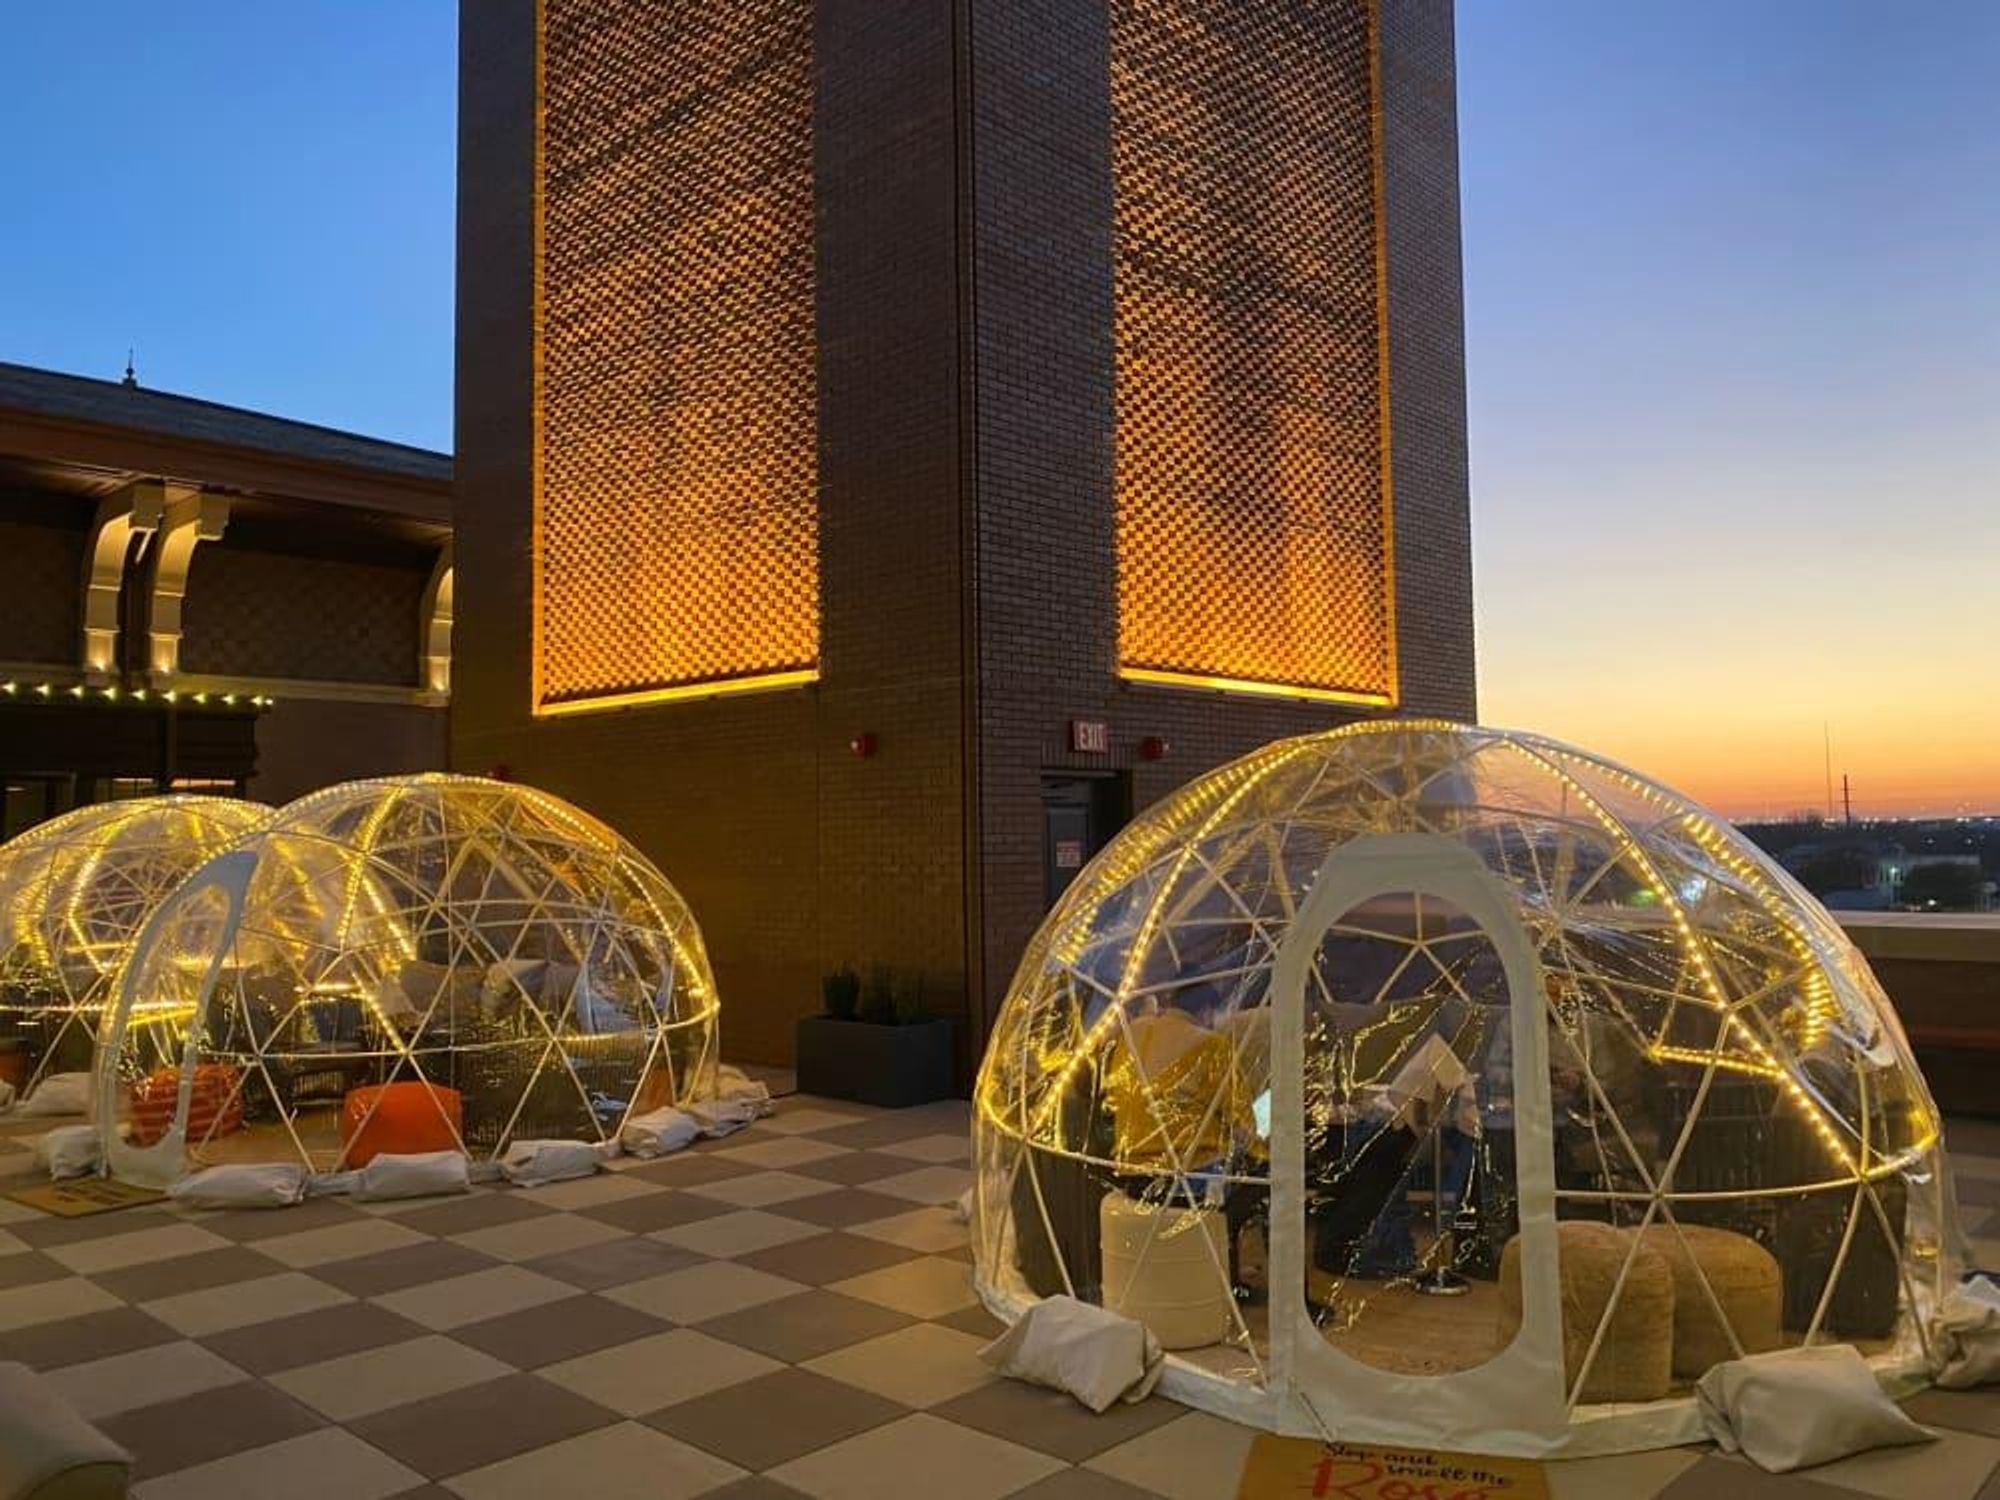 Hotel Vin igloo bubble